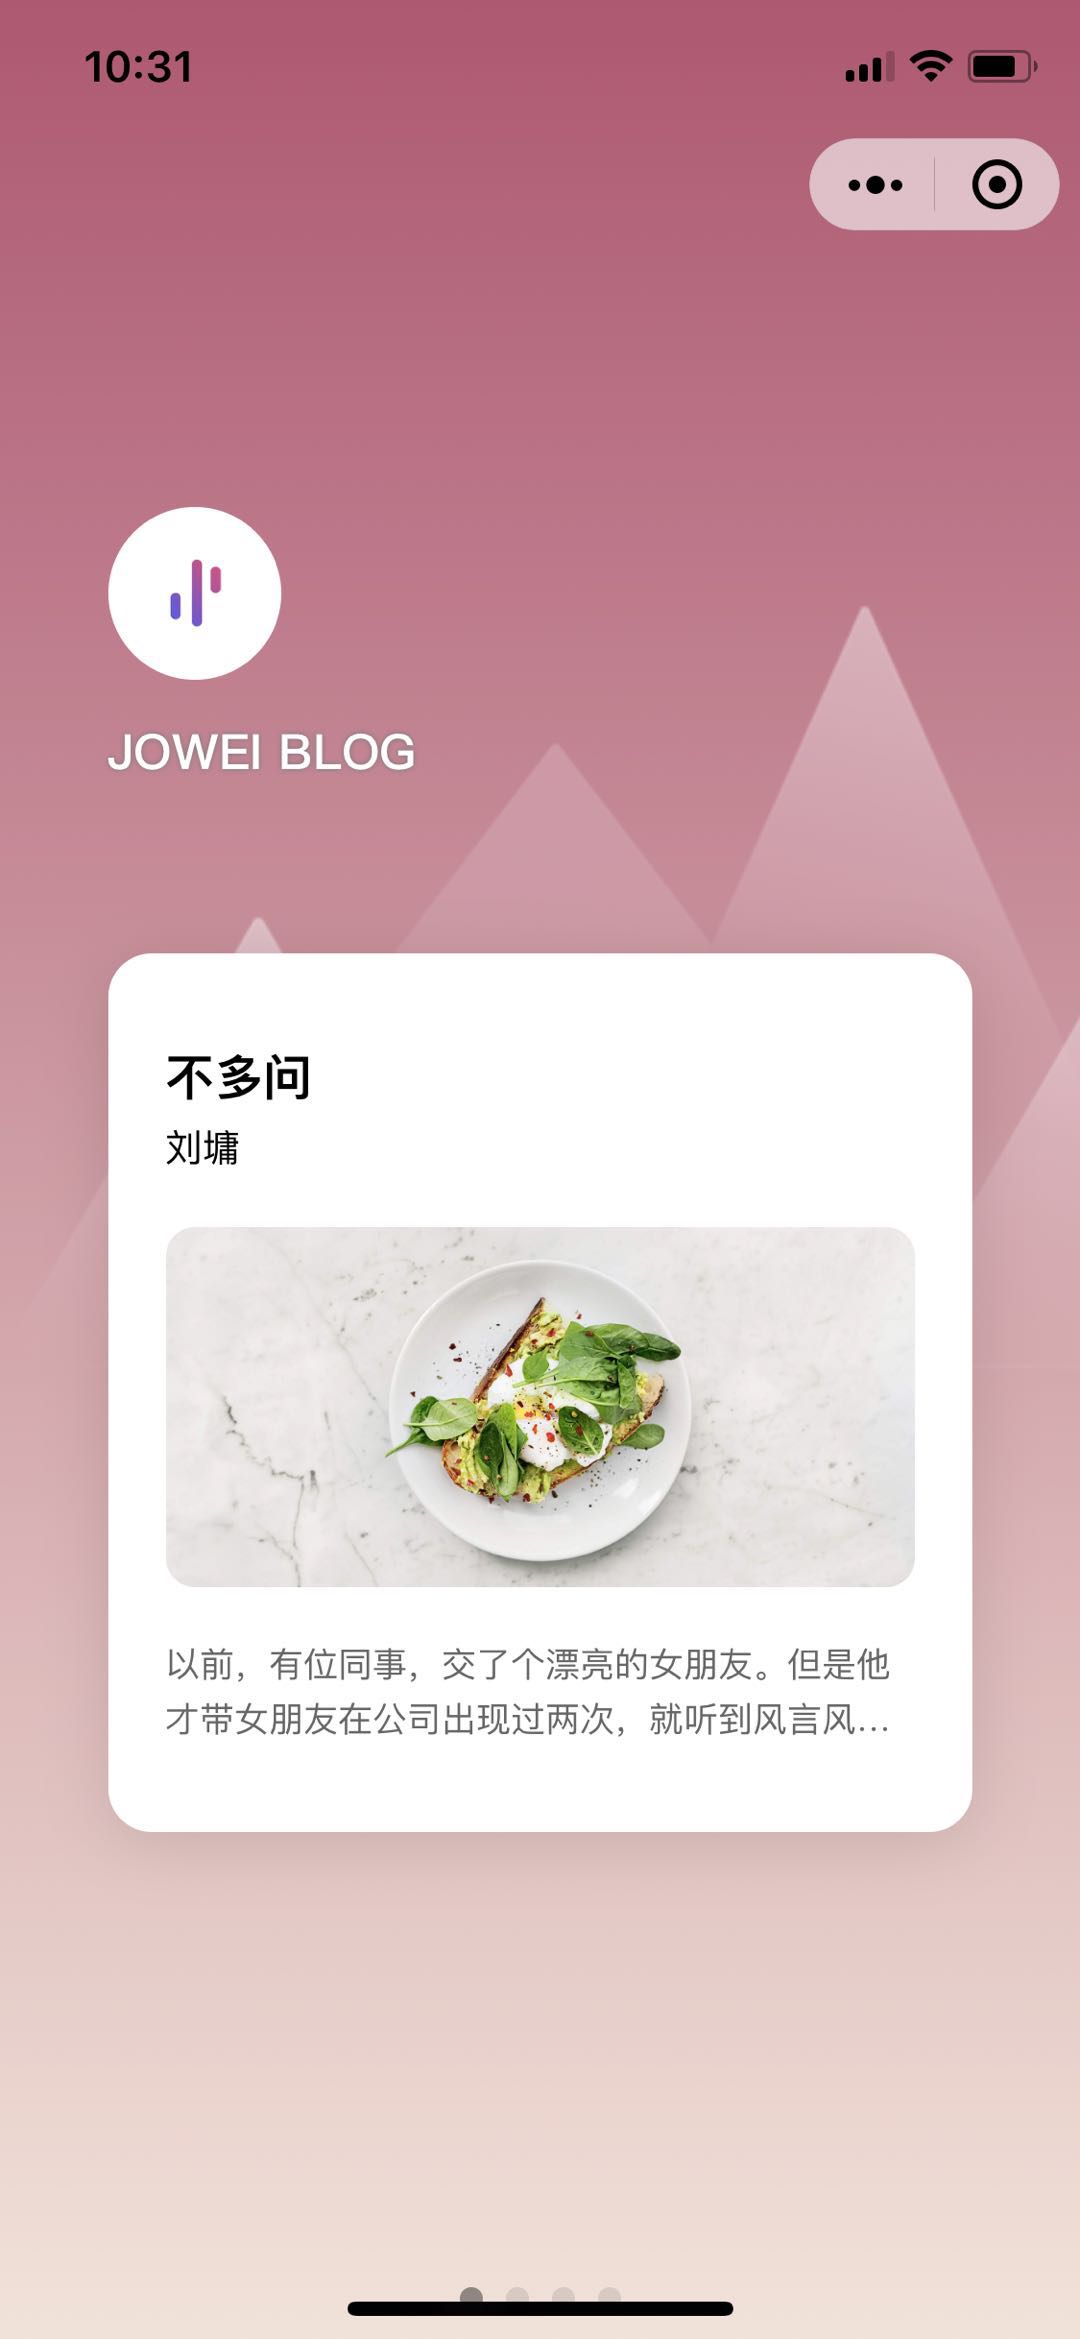 Joweiblog_Joweiblog小程序_Joweiblog微信小程序